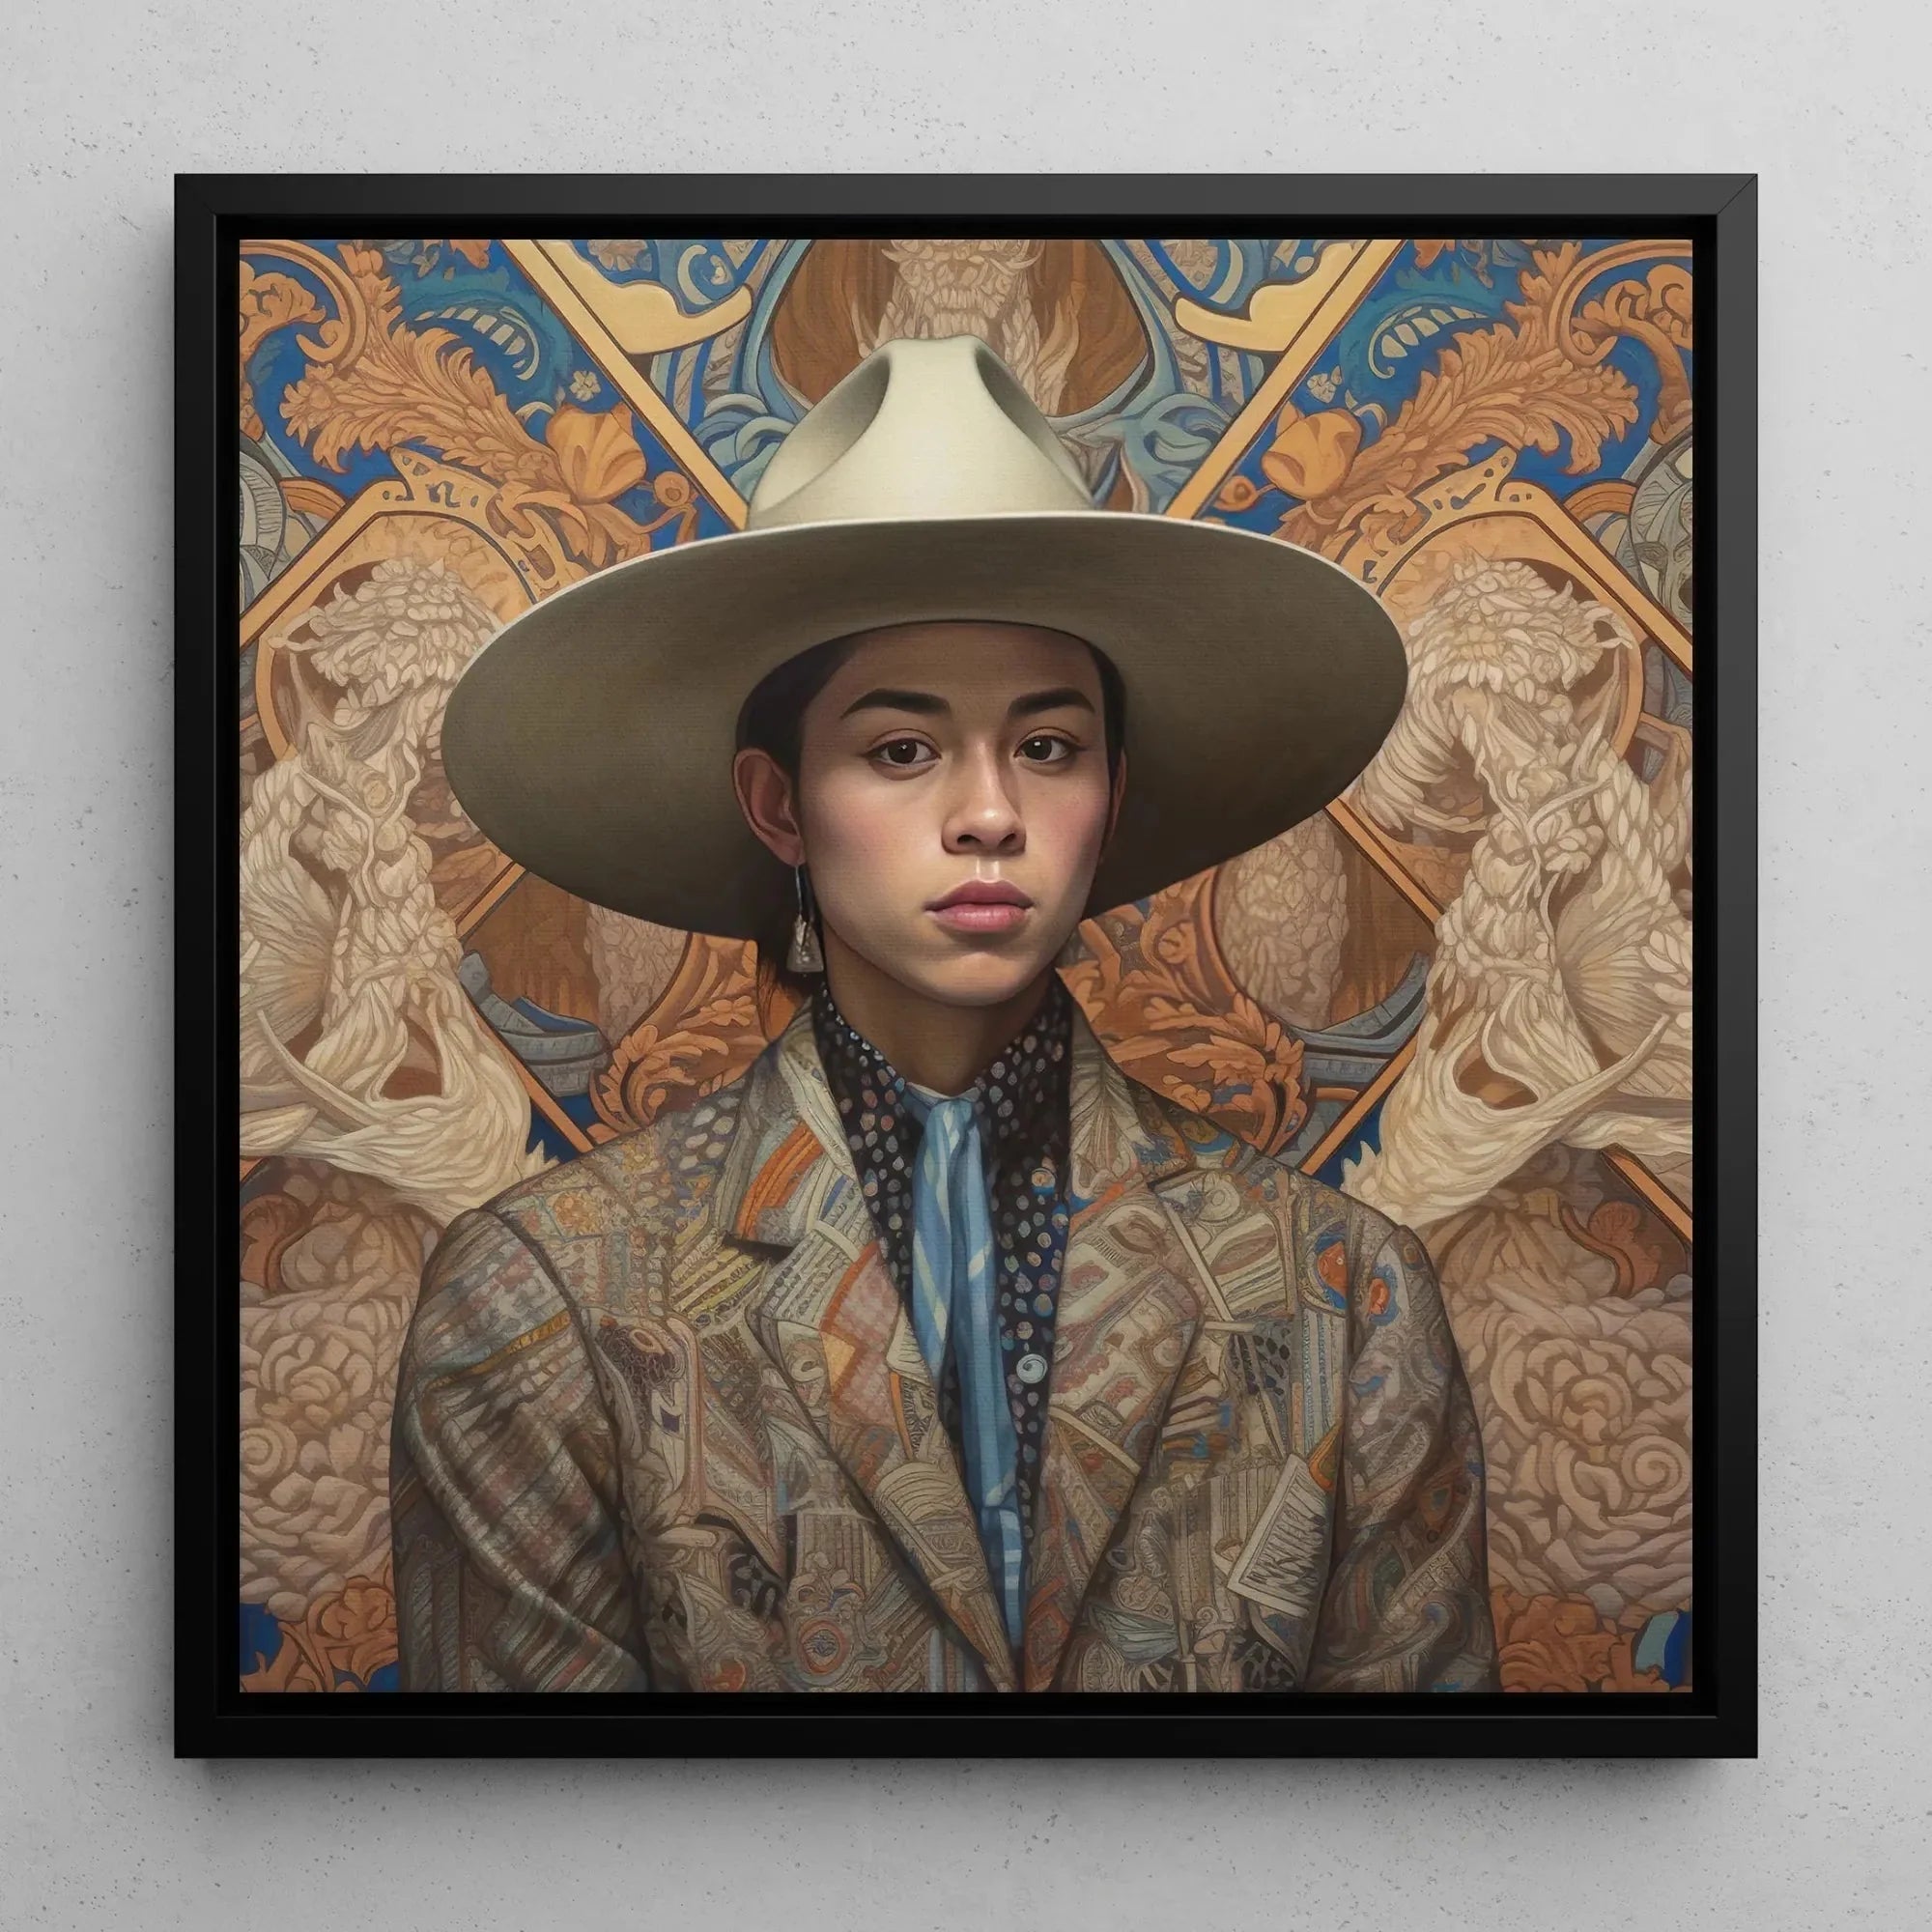 Angel The Transgender Cowboy - F2m Dandy Latinx Canvas Art - 16’x16’ - Posters Prints & Visual Artwork - Aesthetic Art